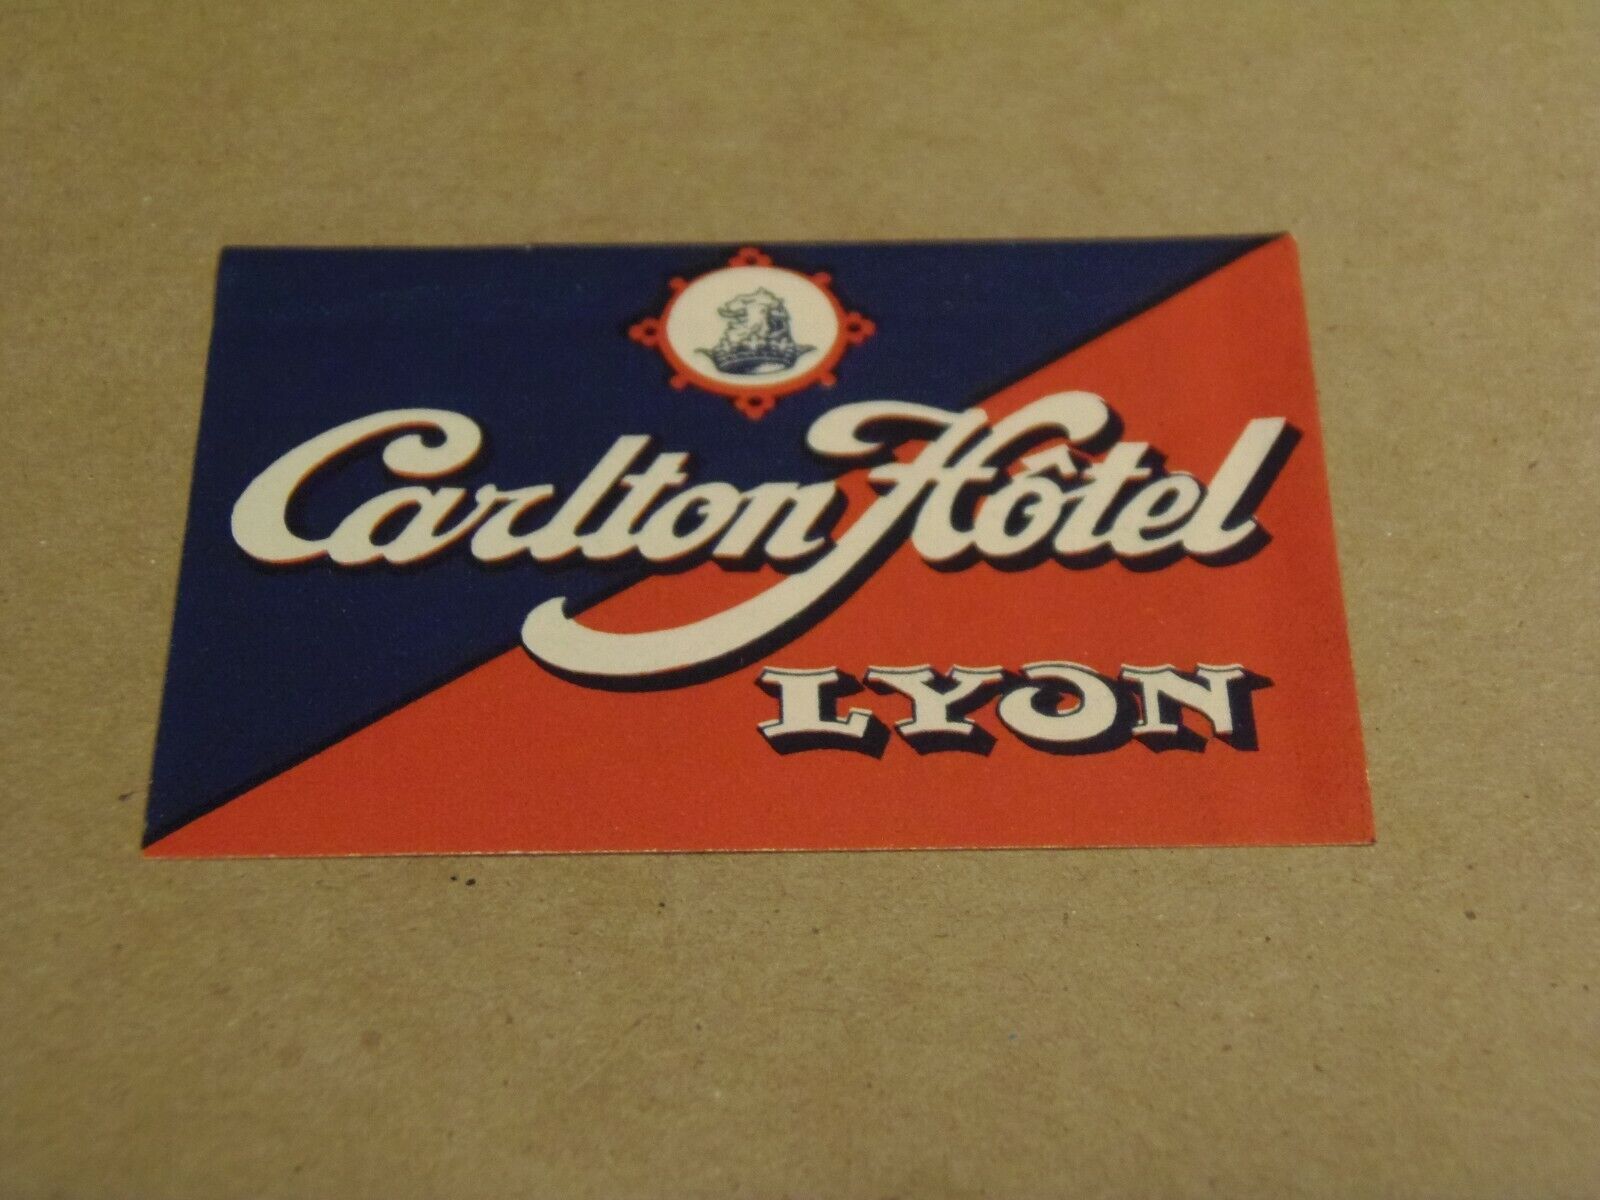 Carlton Hotel, Lyon, France Luggage Label 7/20